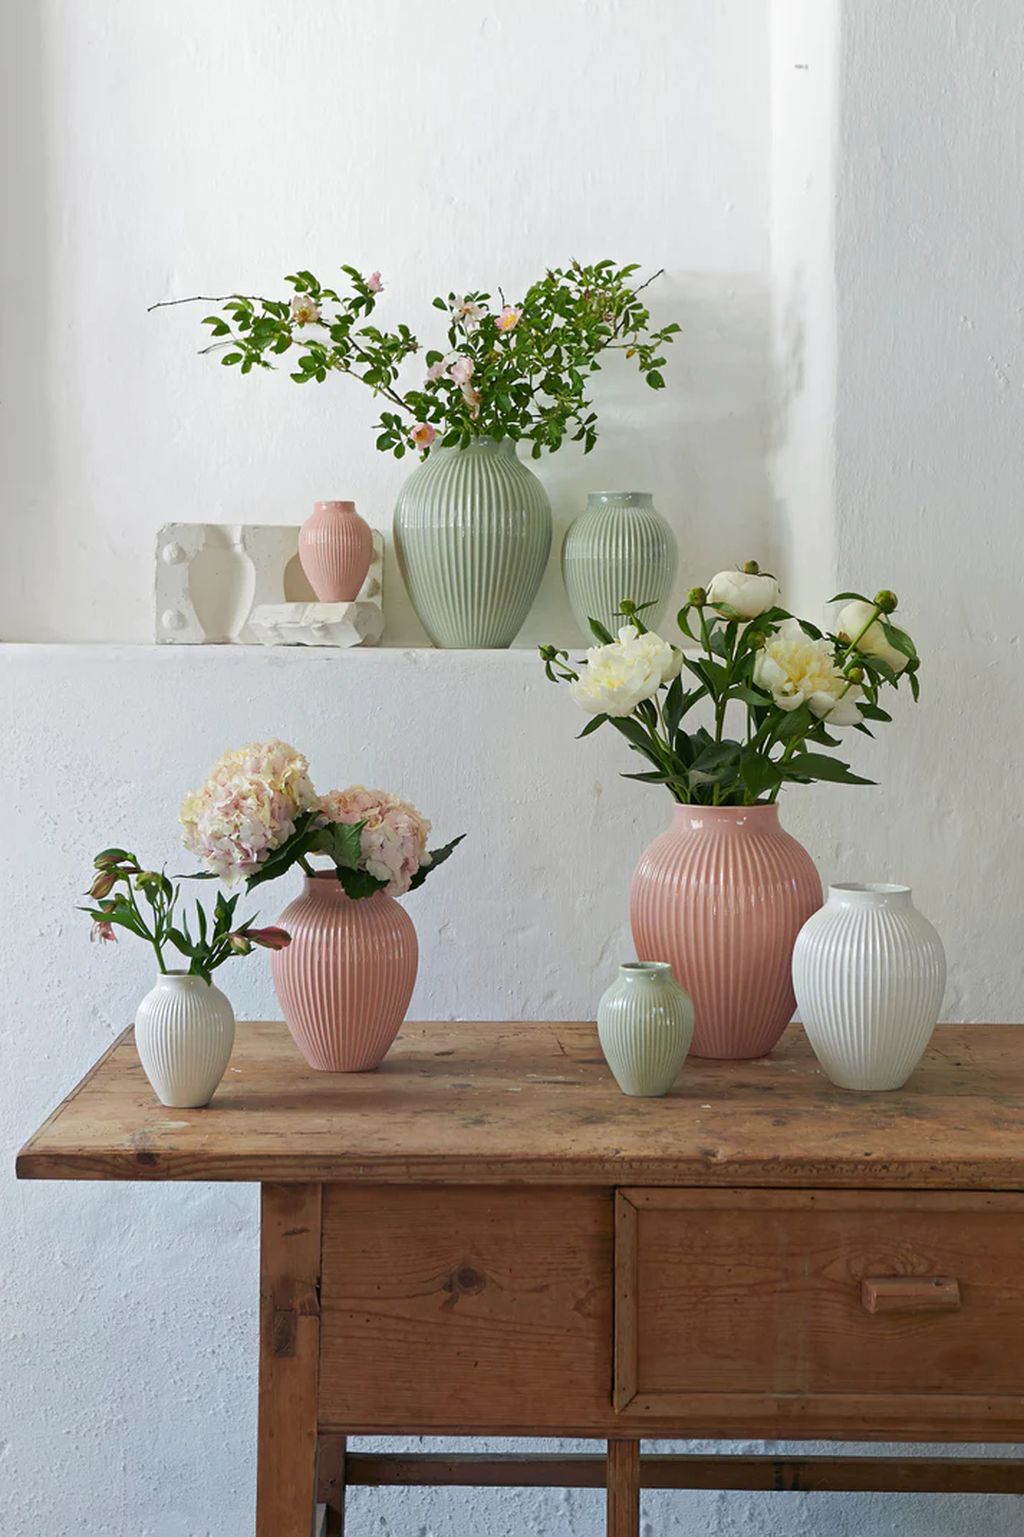 Vase Keramik Knabstrup avec rainures h 20 cm, rose